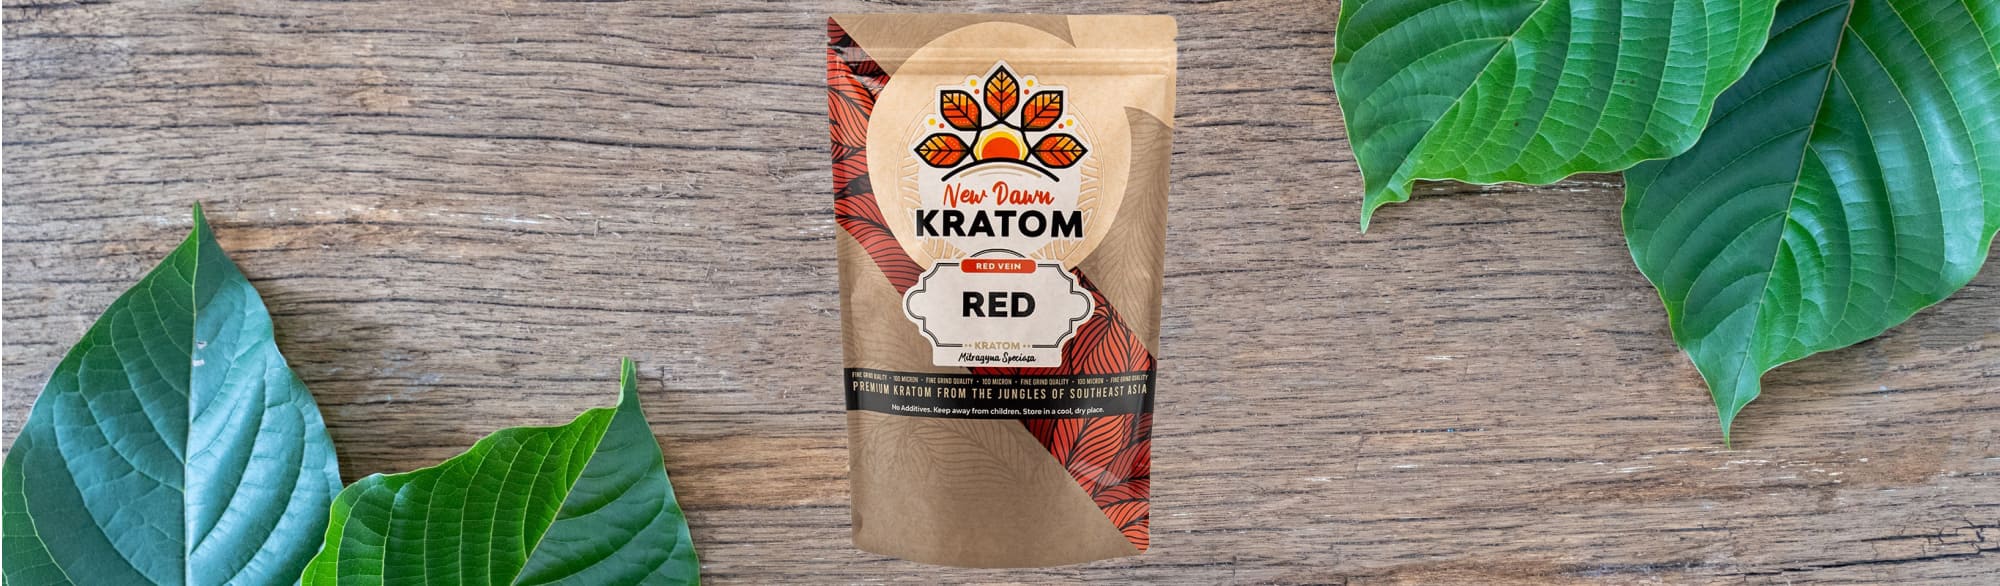 image of red bali kratom for lasting longer in bed